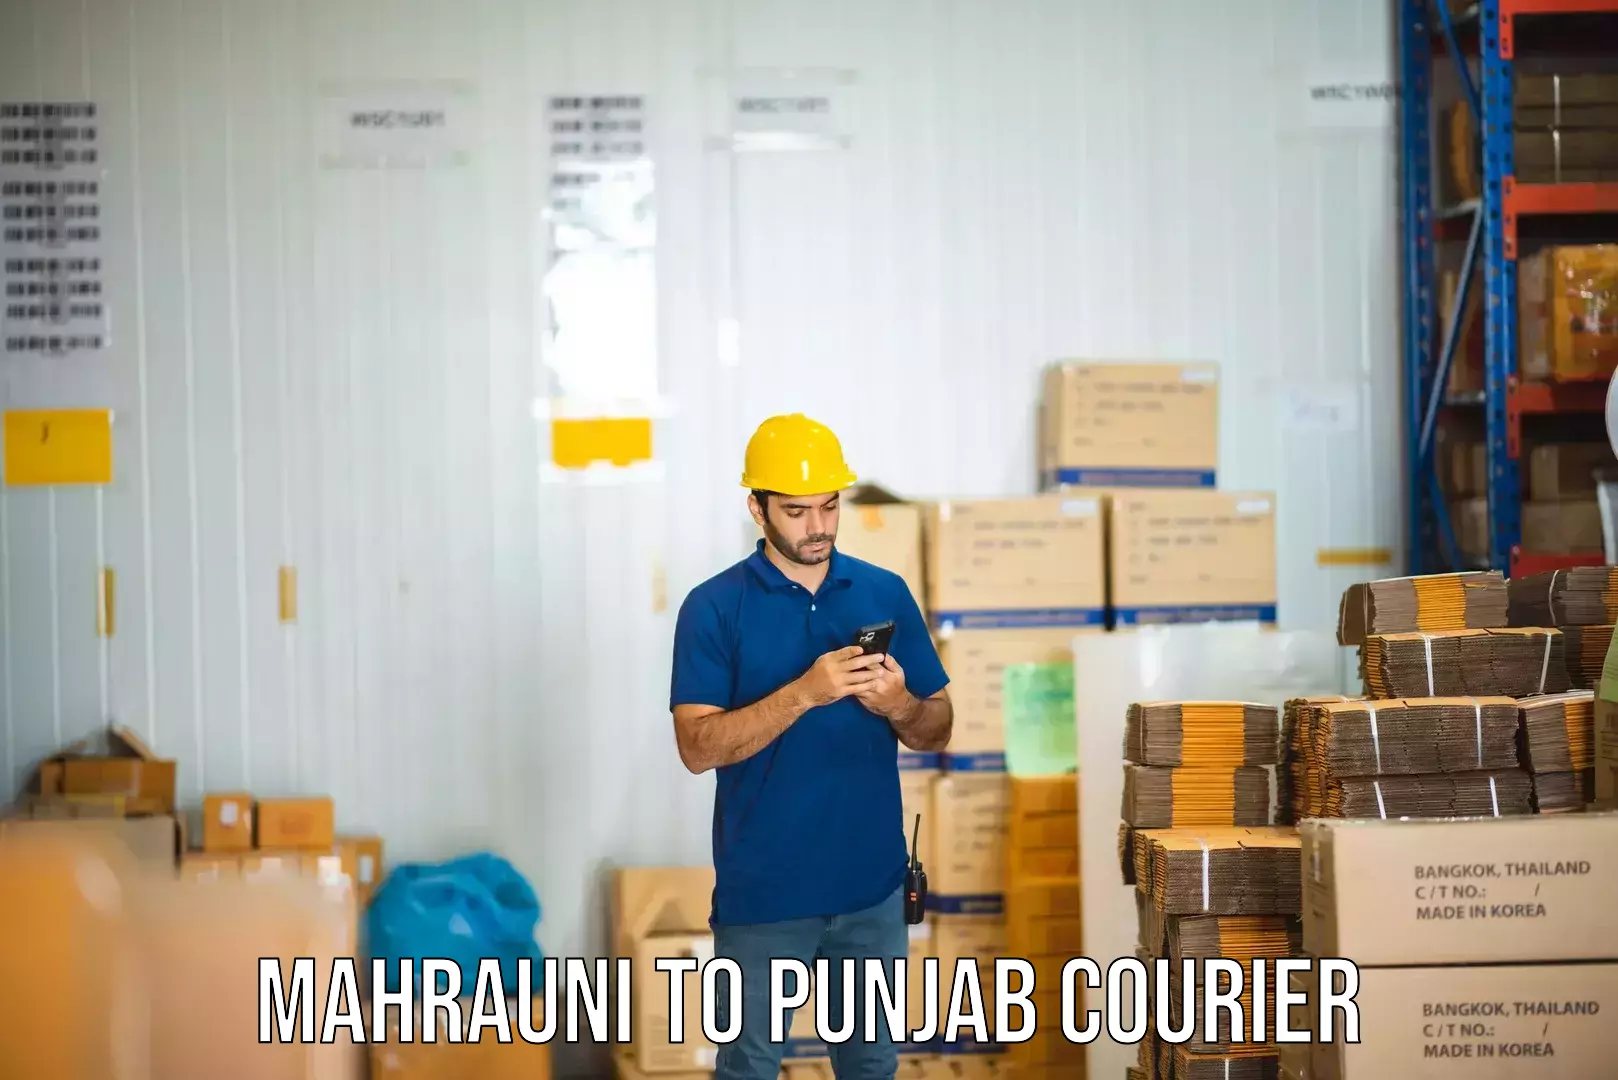 Modern courier technology Mahrauni to Punjab